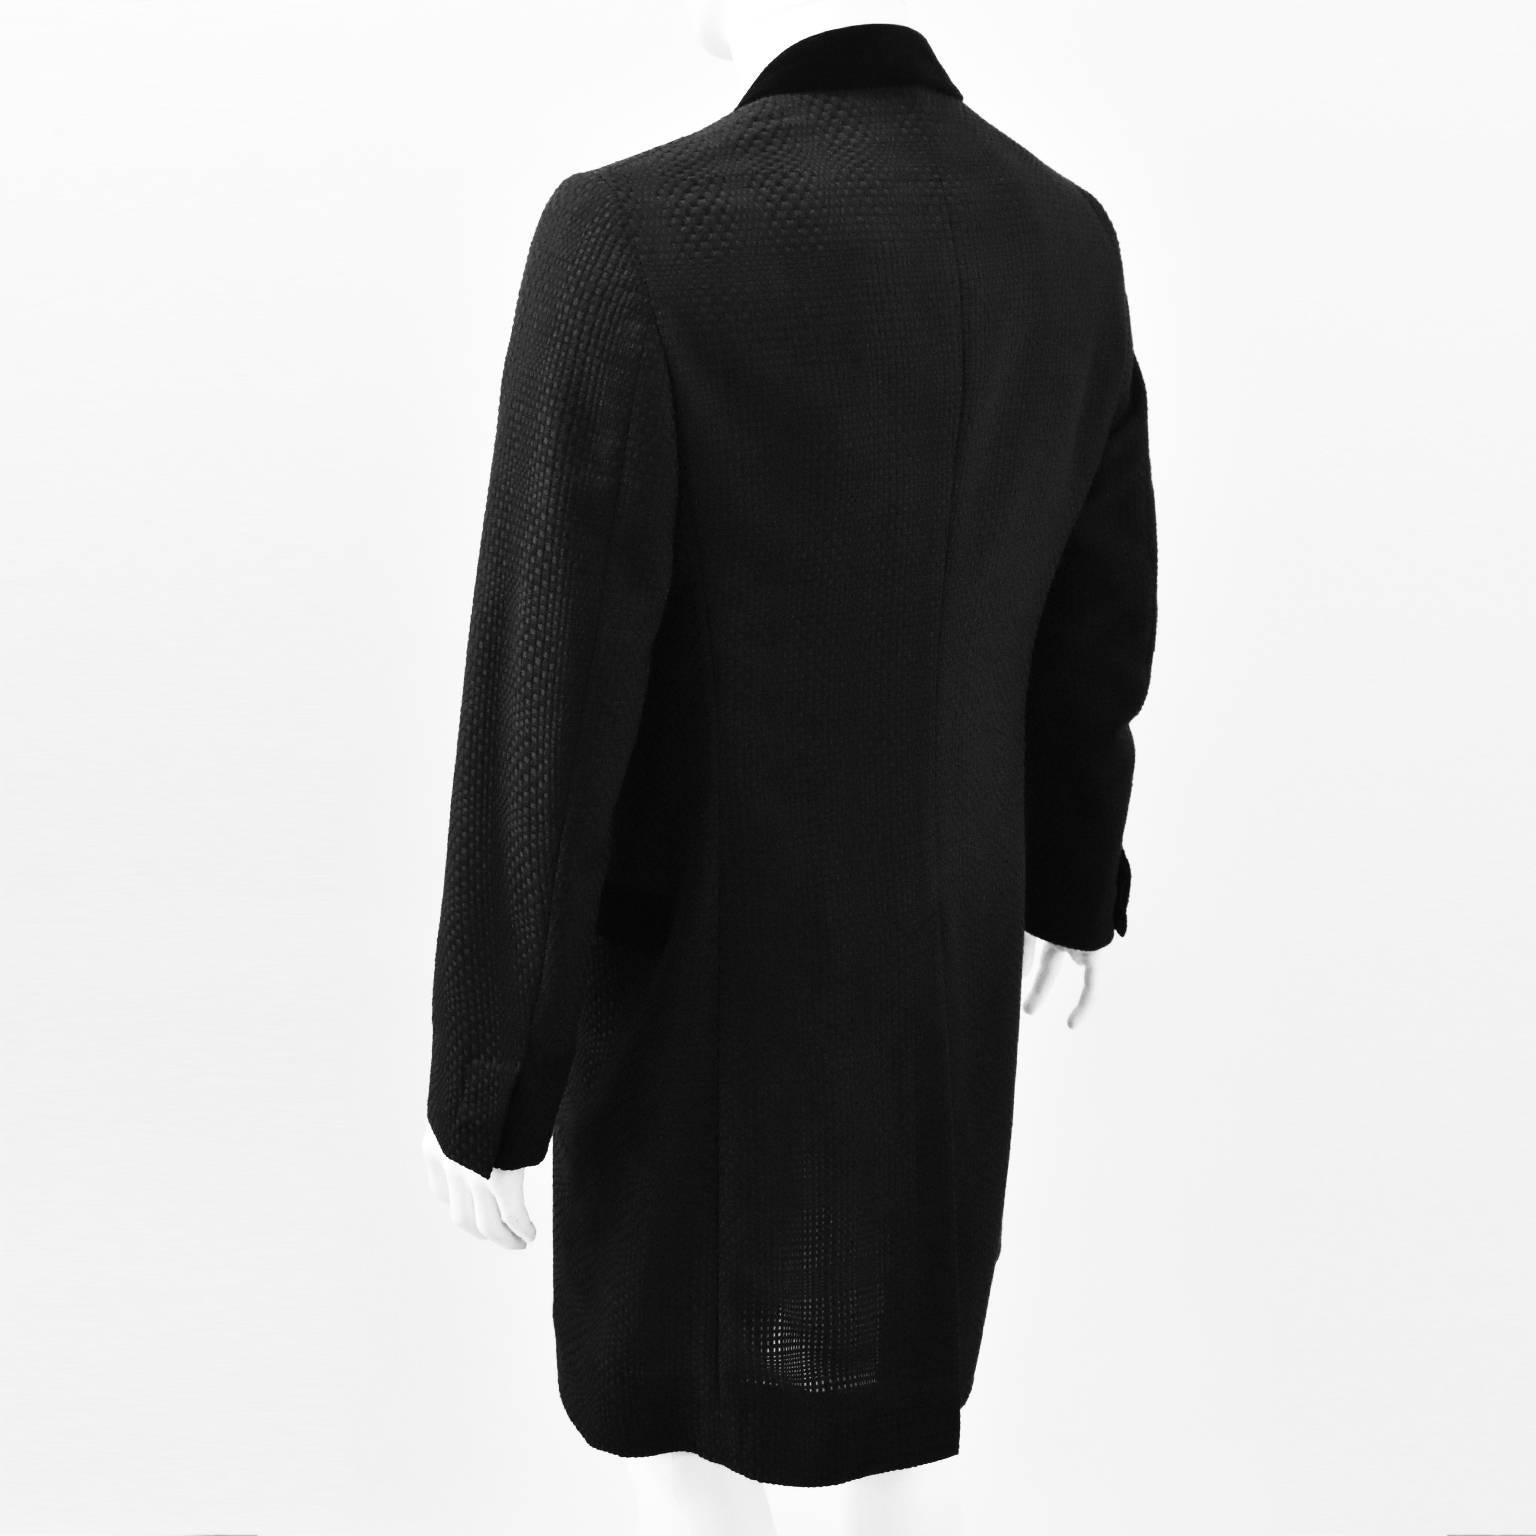 Men's Alexander McQueen Black Woven Coat with Contrast Velvet Collar and Pockets S/S 1 For Sale